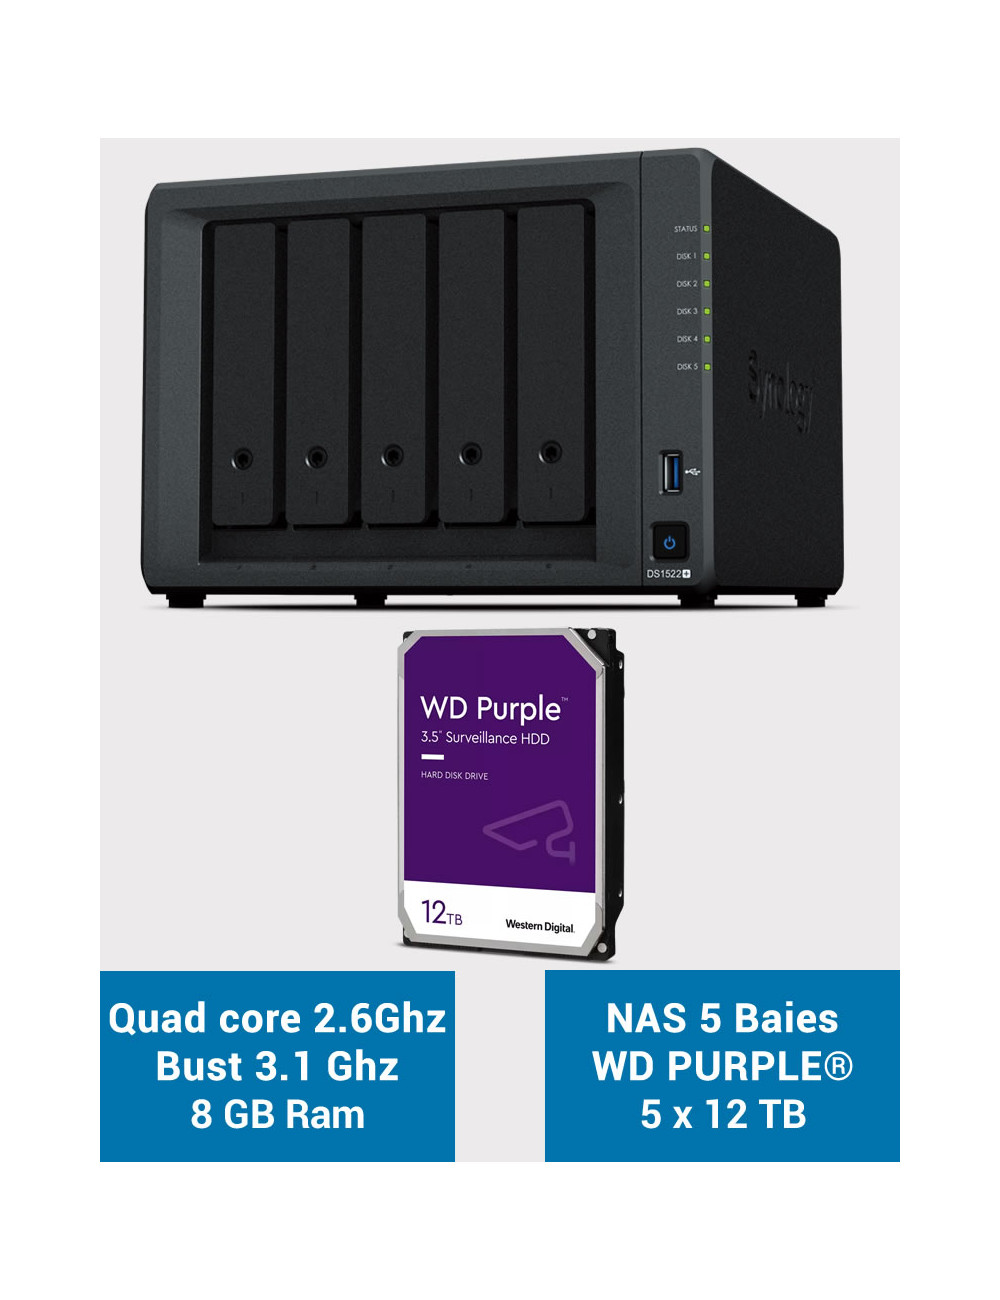 Synology DiskStation® DS1522+ NAS Server WD PURPLE 60TB (5x12TB)